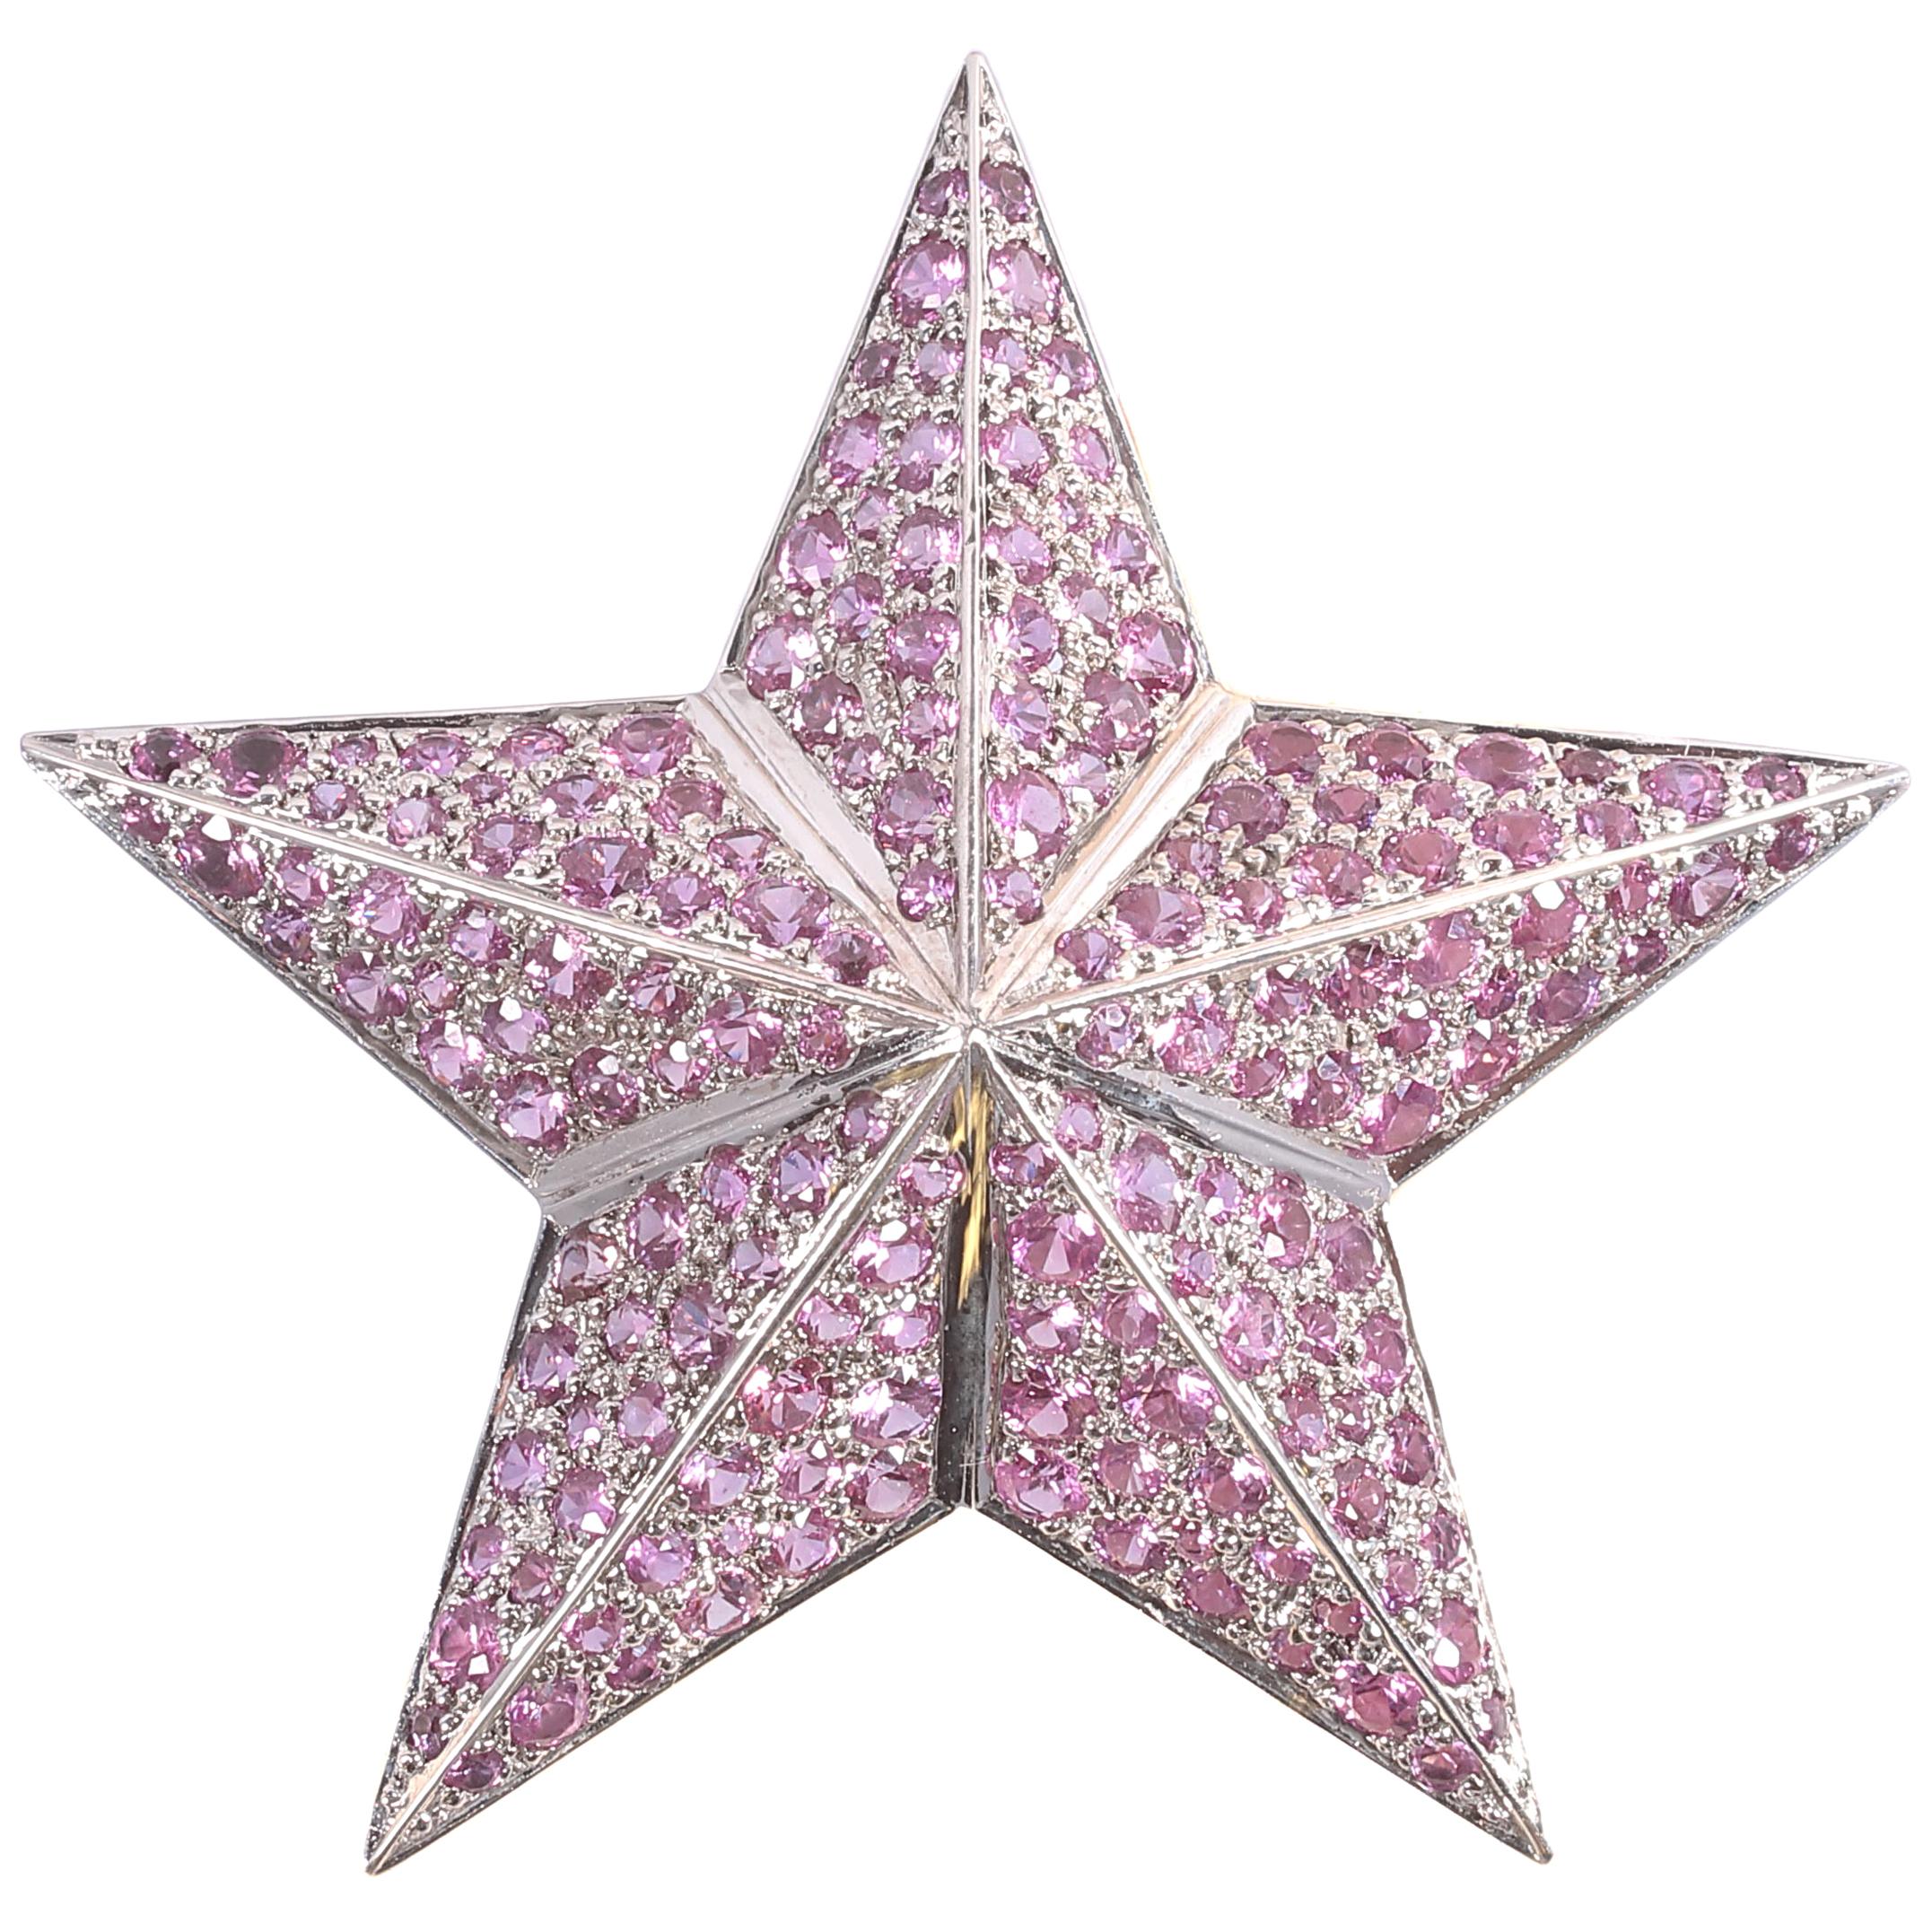 8.10 Carat Pink Sapphire Star Brooch